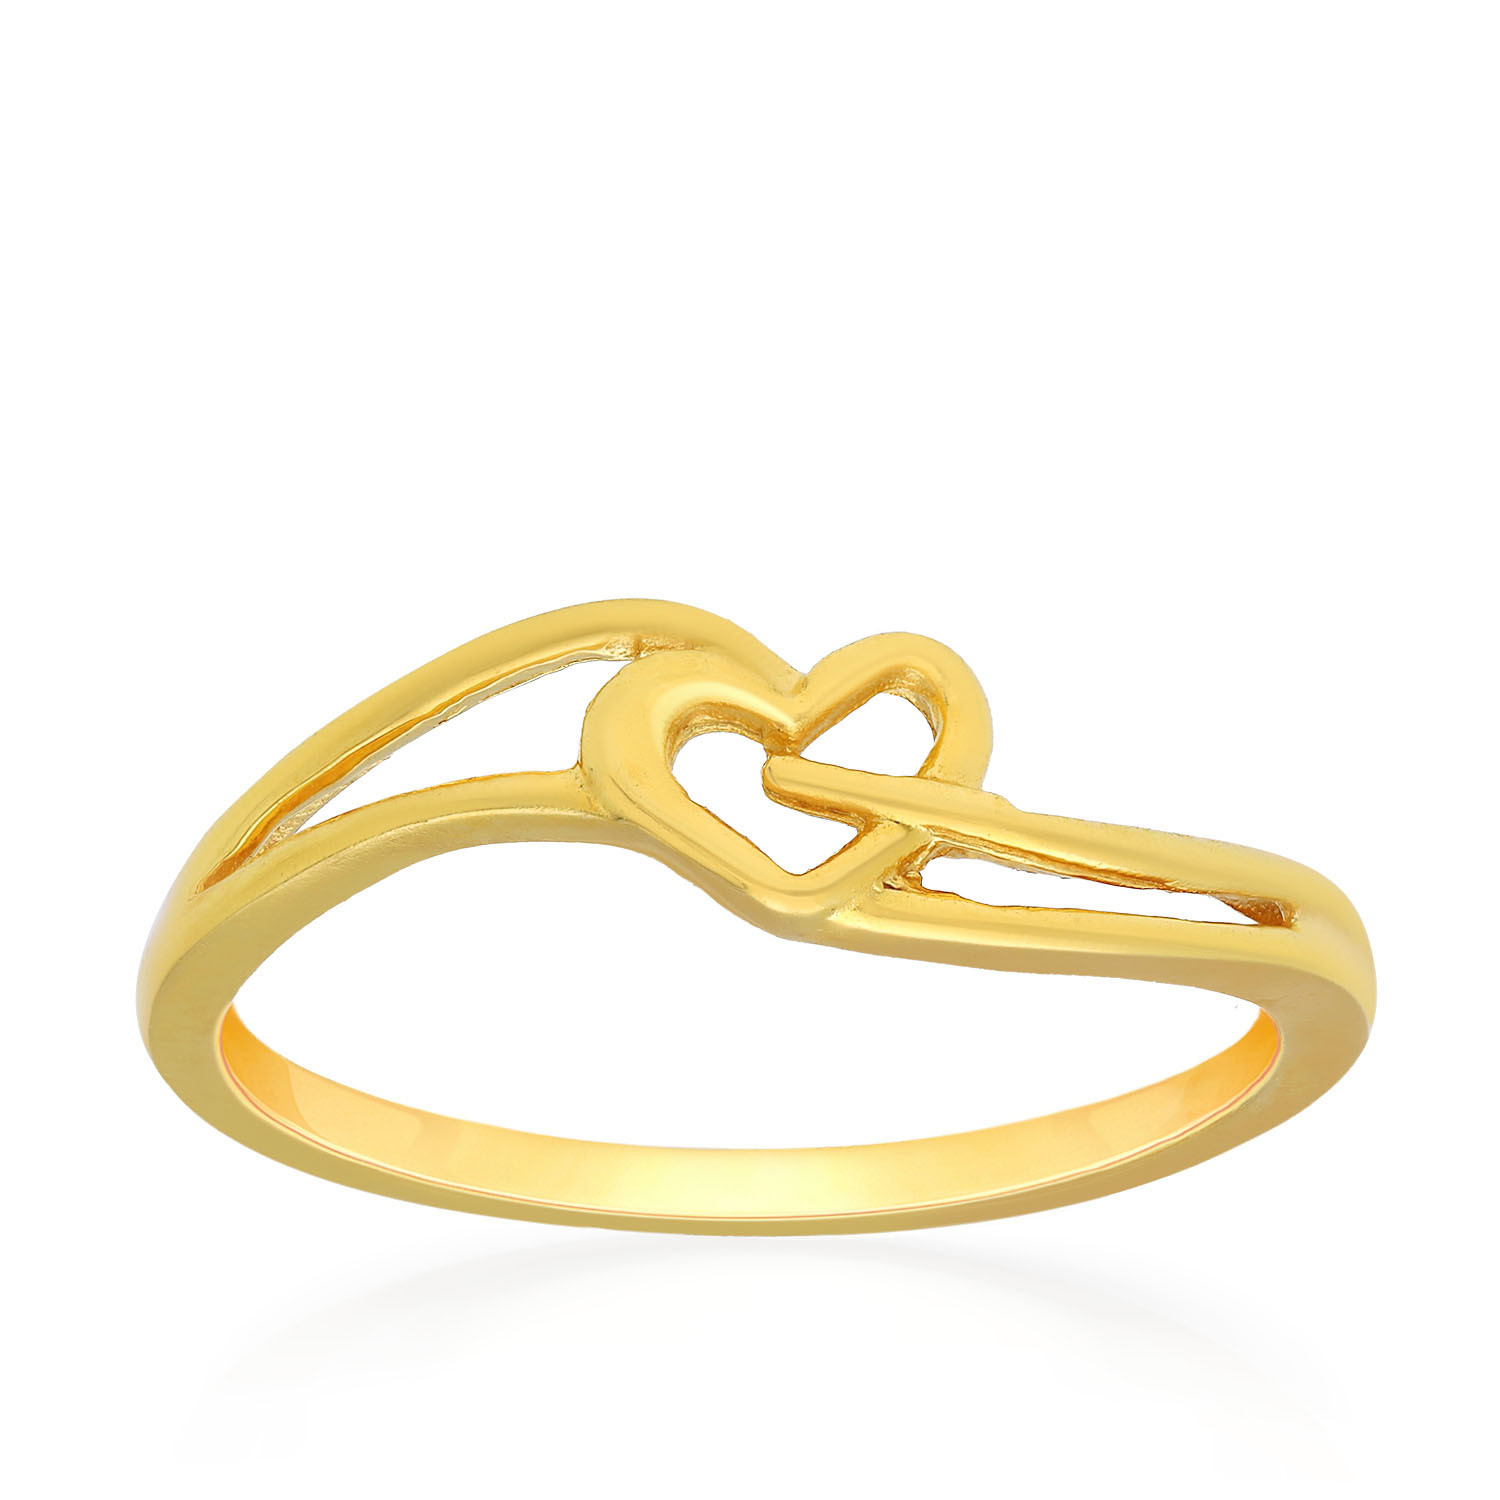 Malabar 22 KT Gold Studded Casual Ring FRGEDZRURGW715